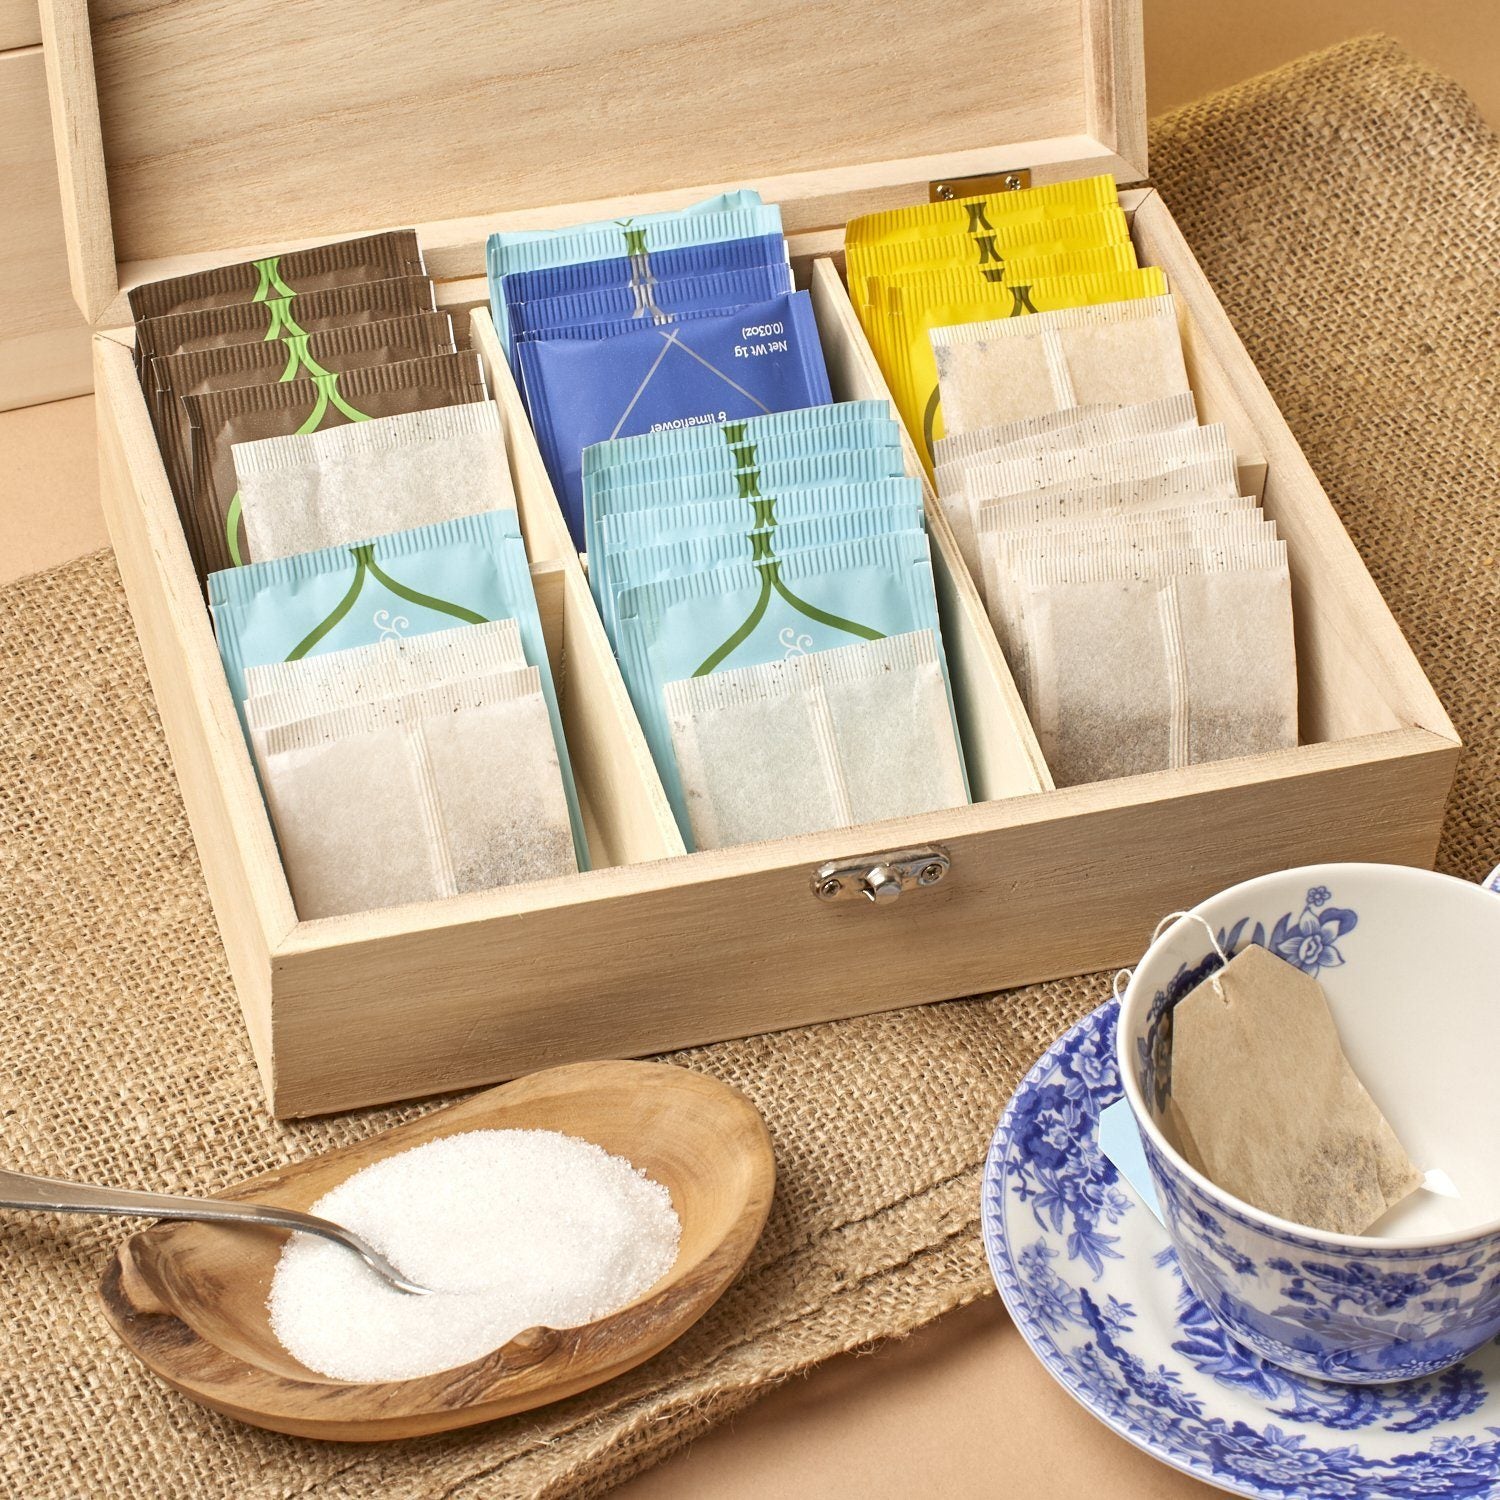 Tea Box - Personalised Engraved Bepoke Tea Storage Box Or Caddy - Monogram Design